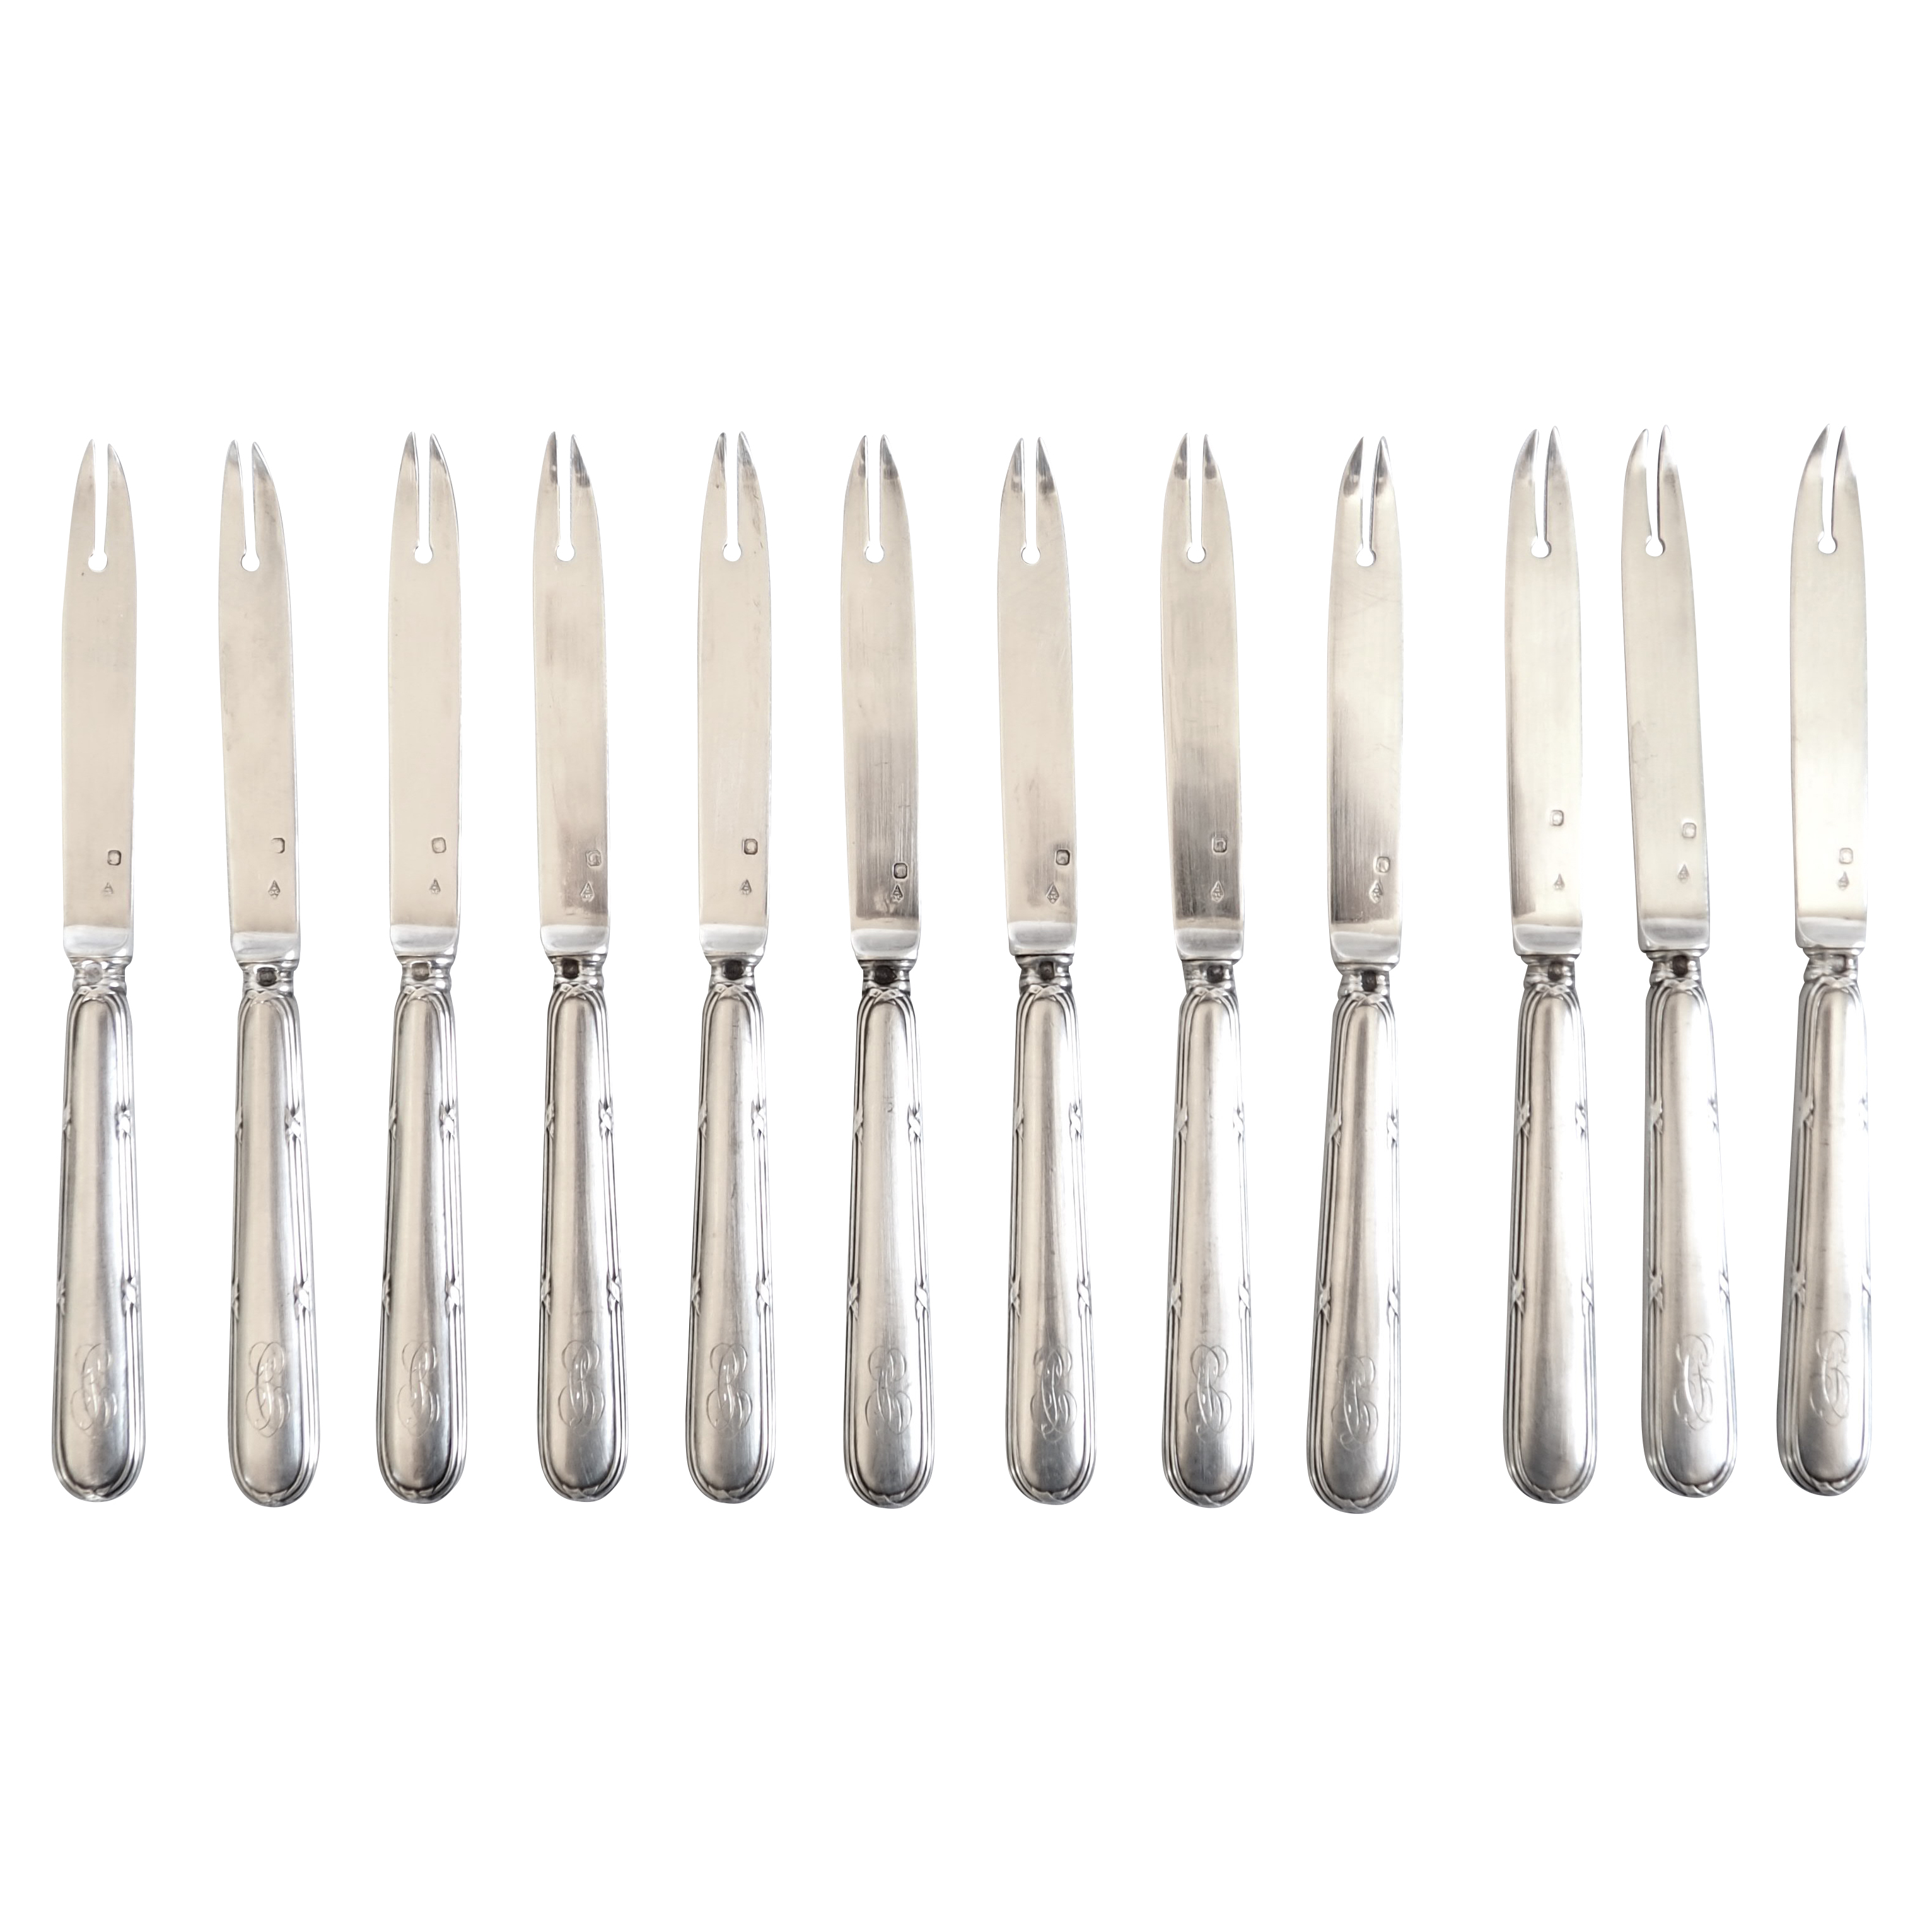 Olier & Caron : set of 12 sterling silver melon knives / forks